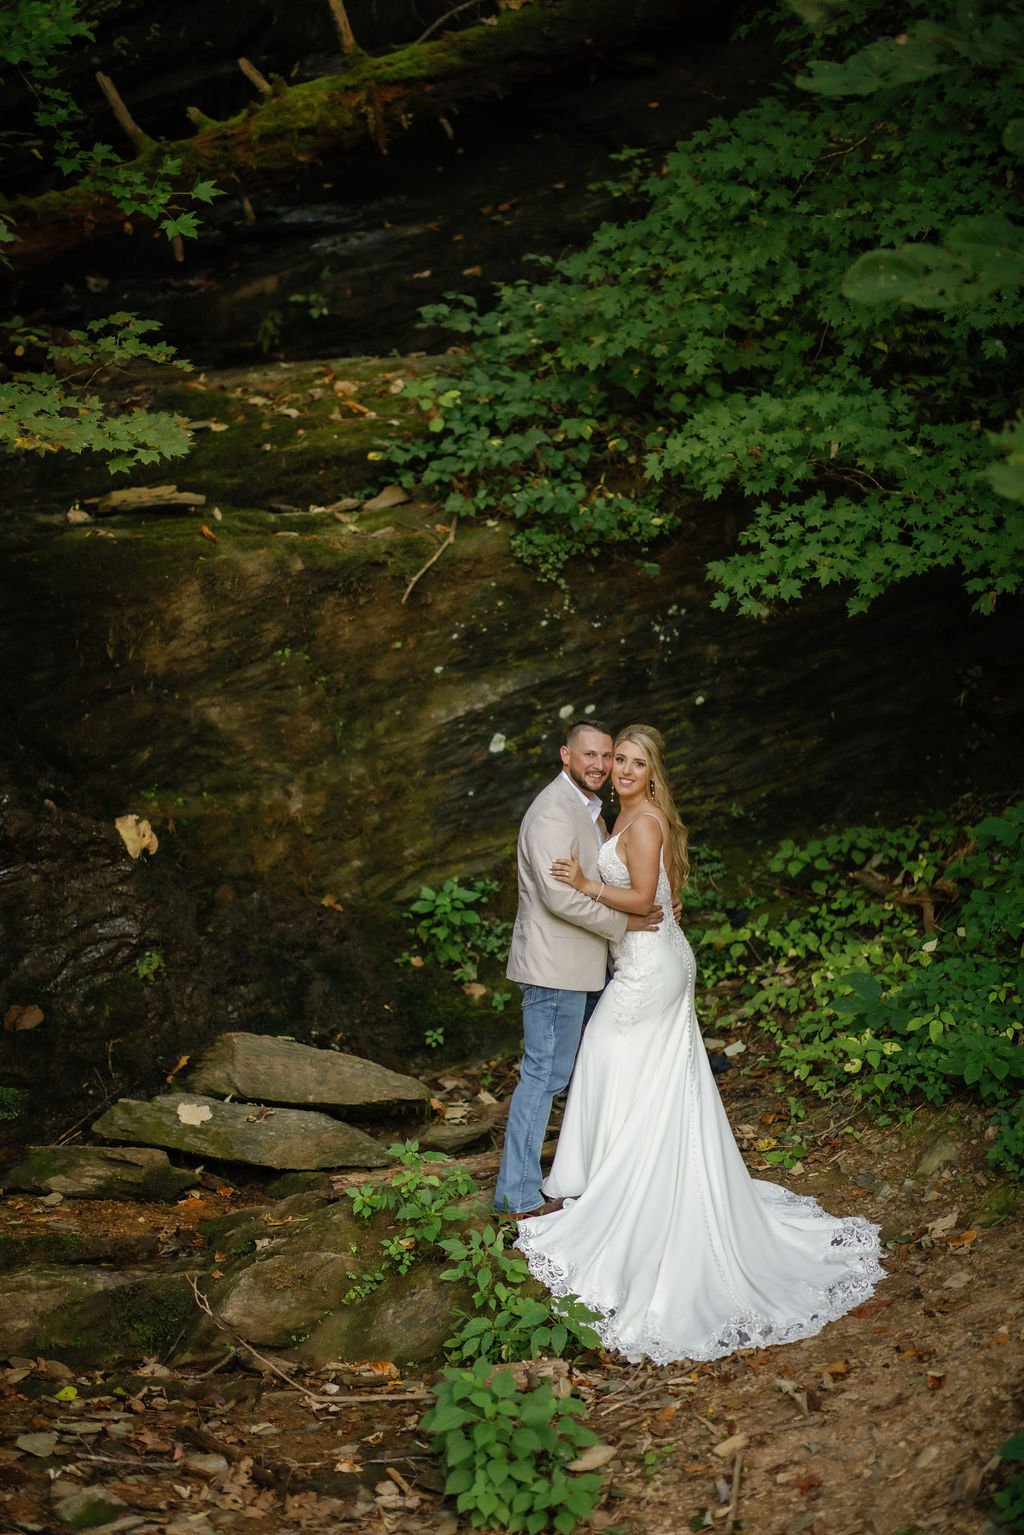 gatlinburg-wedding-photographer-if-uncles-brings-a-camera-to-a-gatlinburg-wedding-bride-kissing-groom